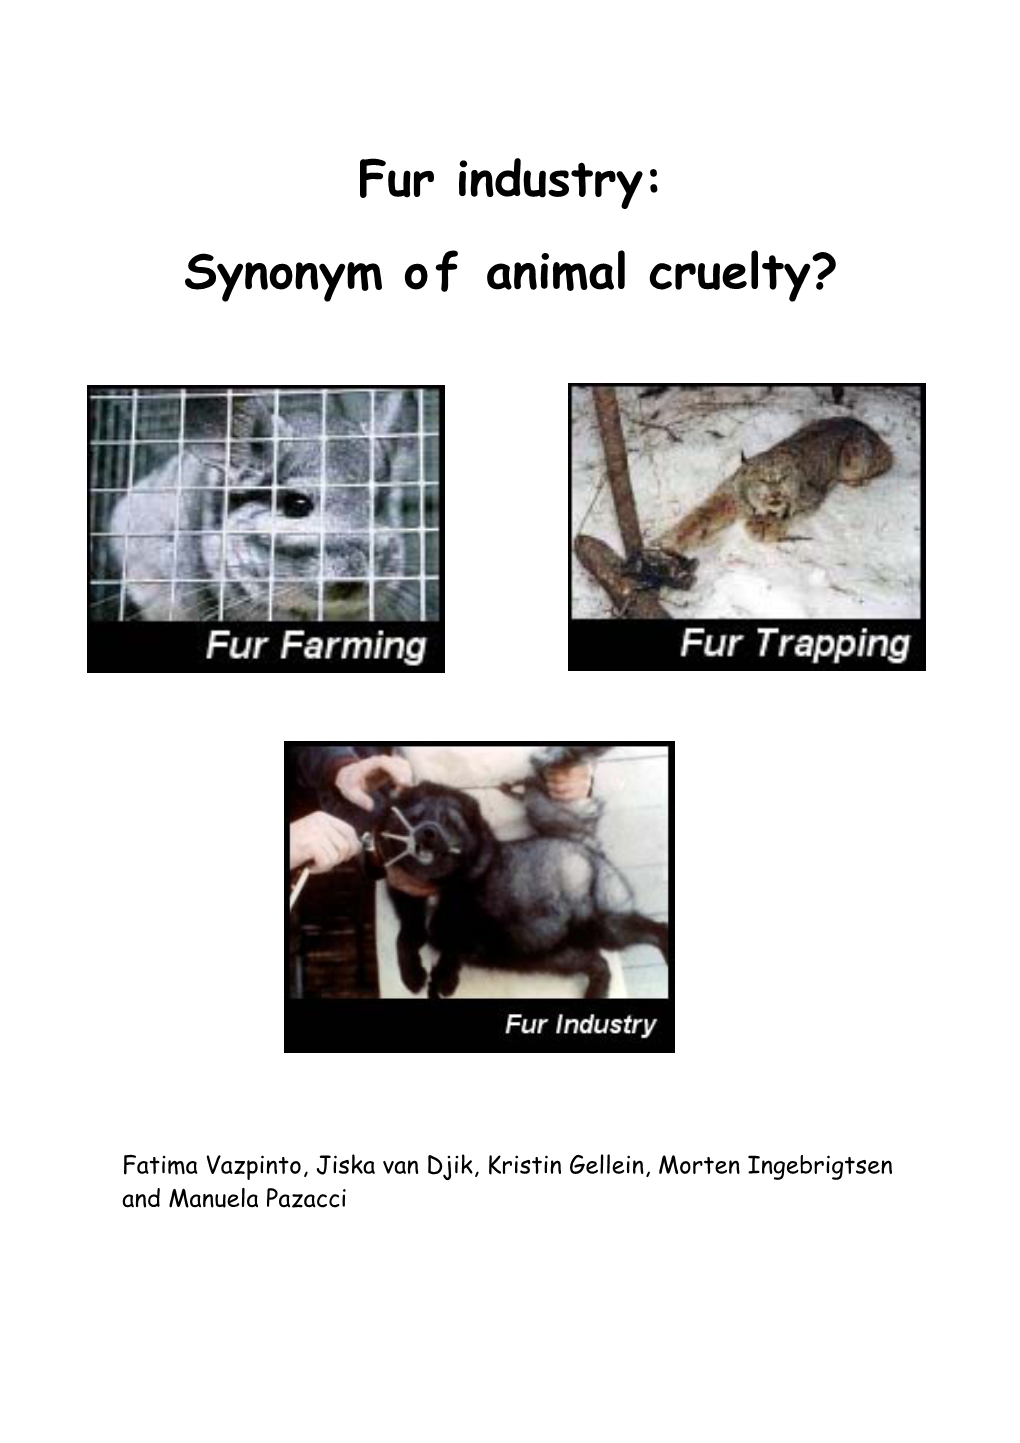 Fur Industry: Synonym of Animal Cruelty?